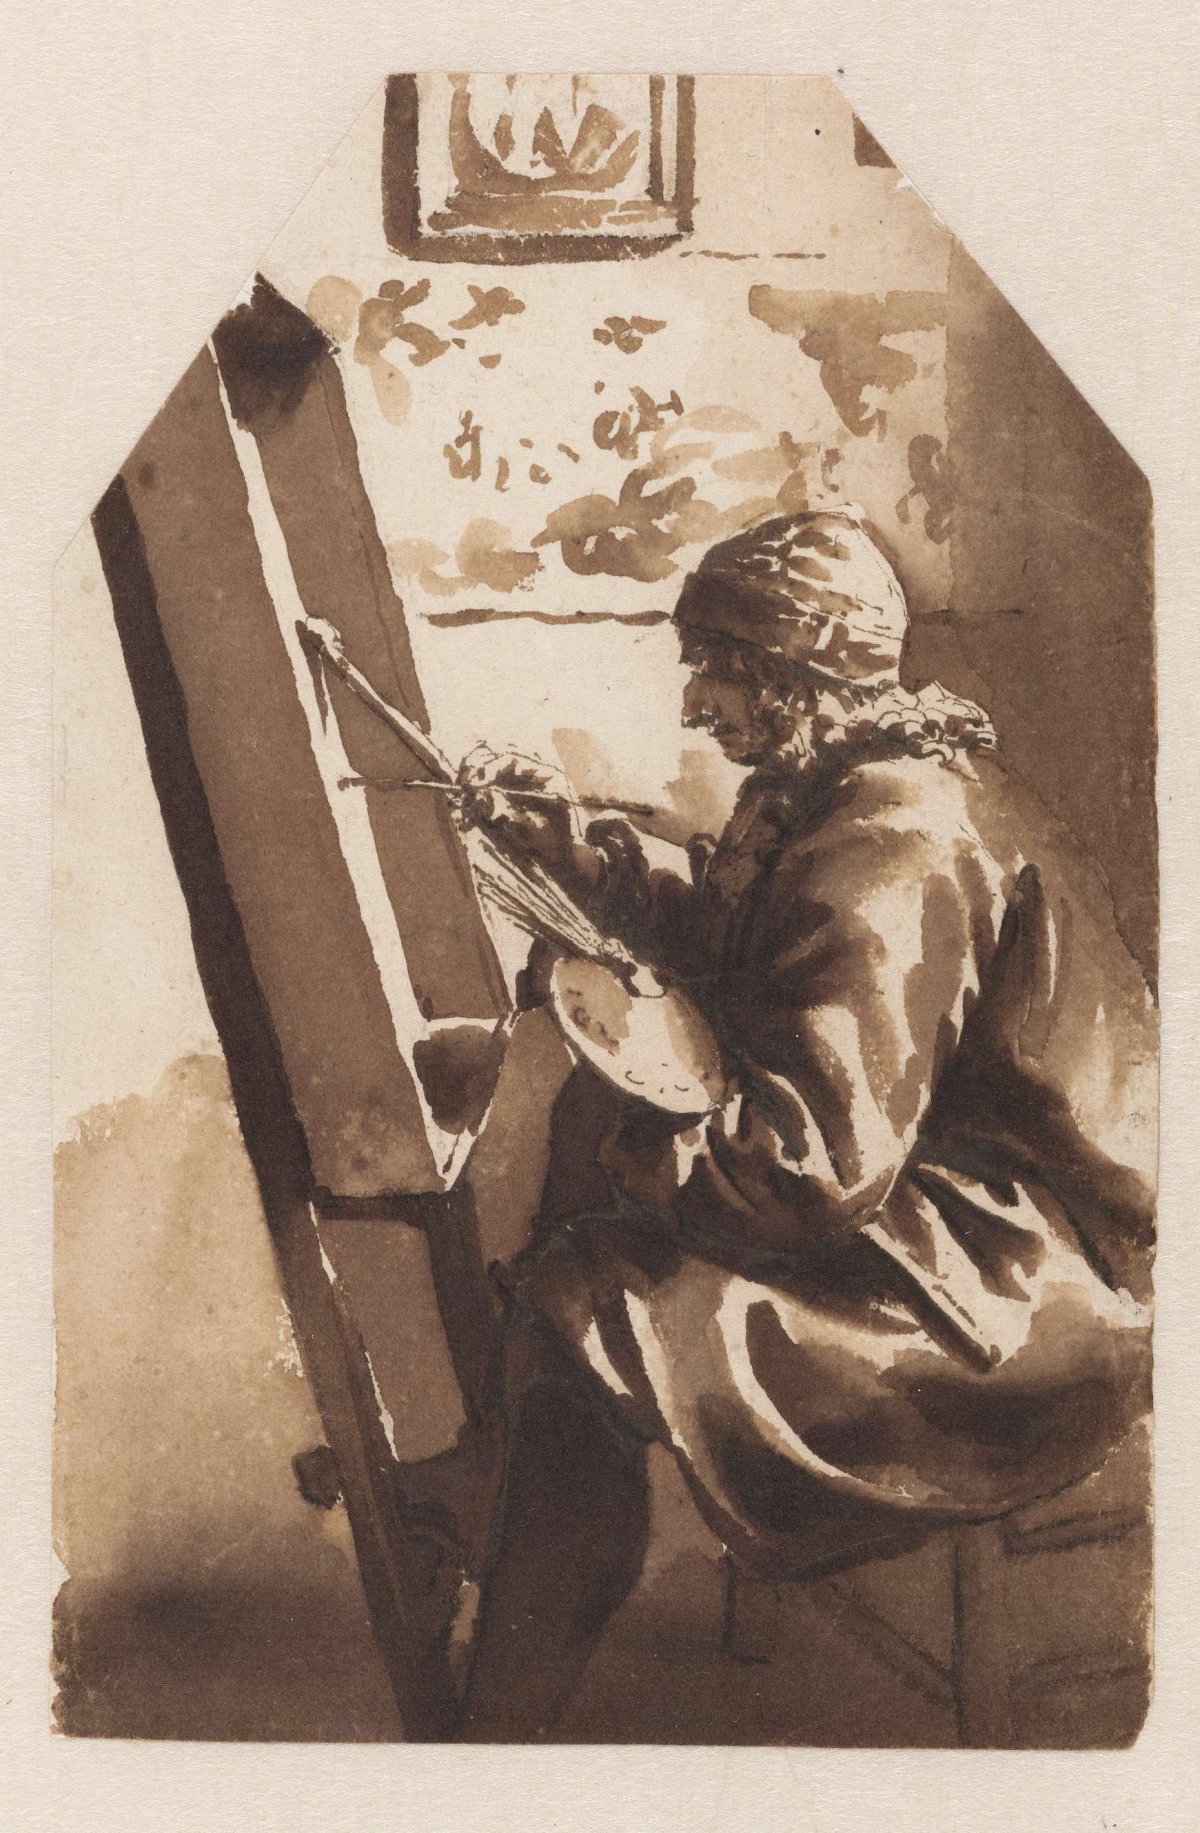 A Painter Seated at his Easel, Jan de Bisschop, 1648 - 1671